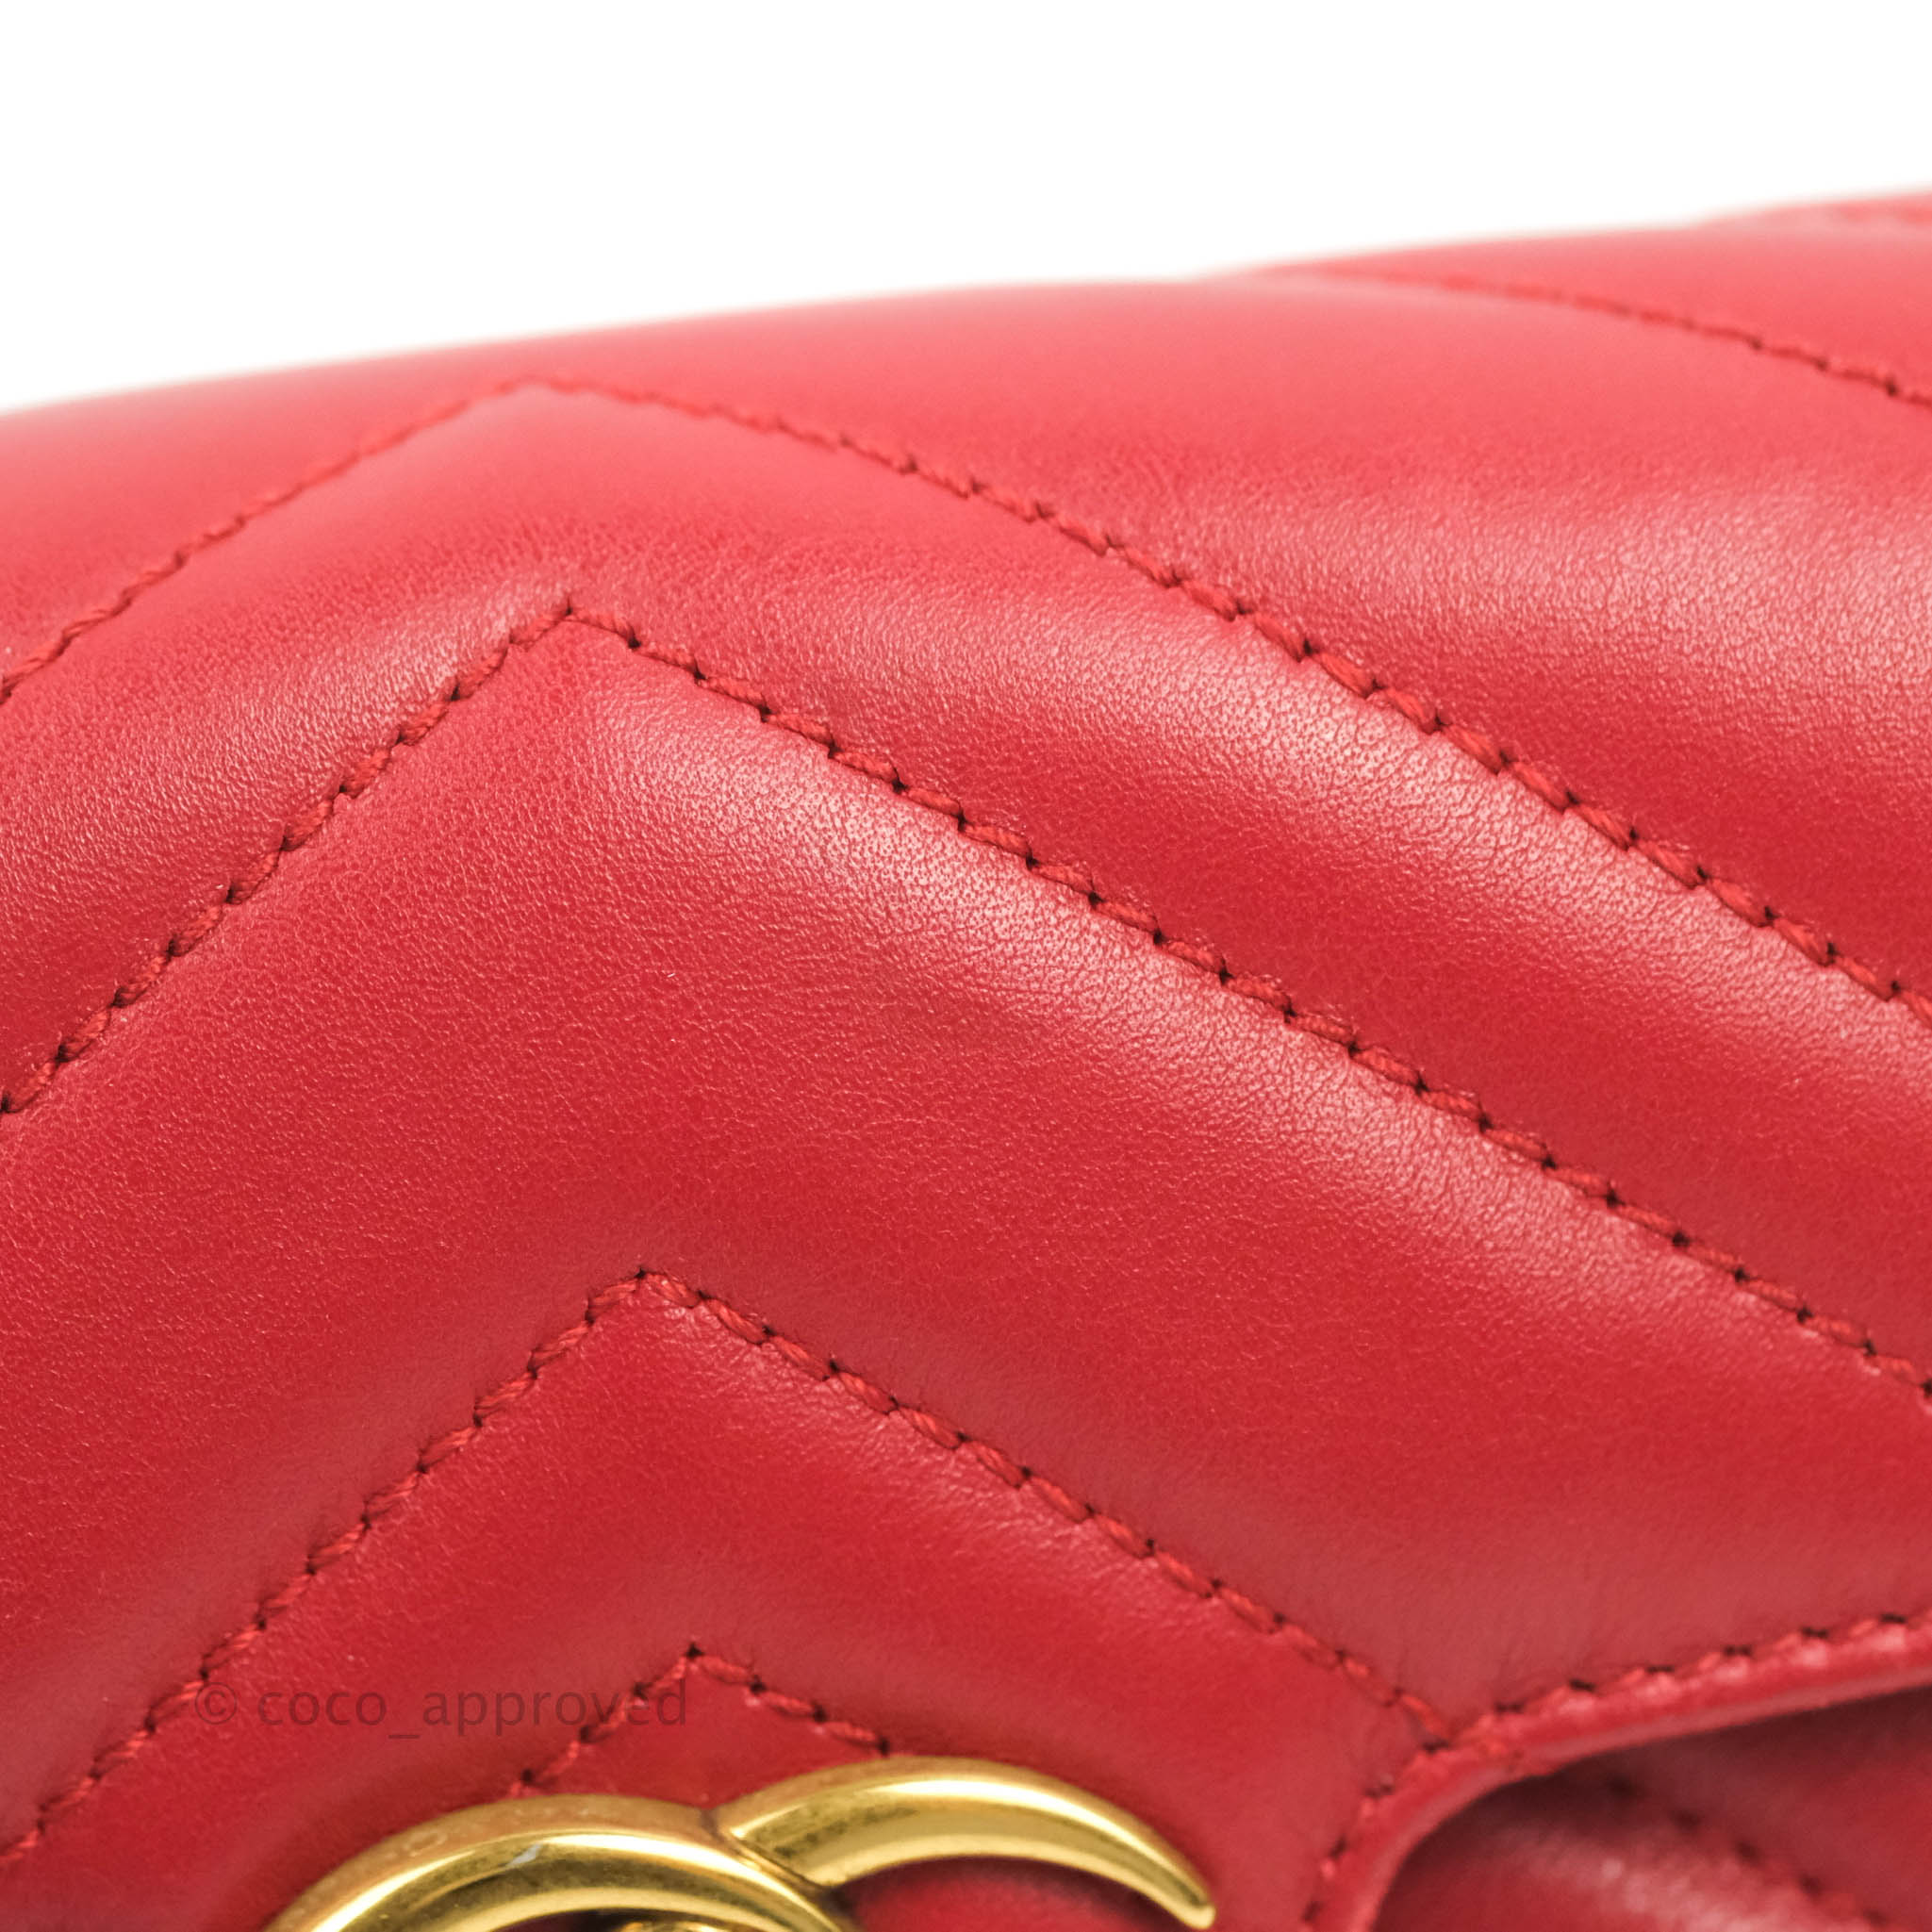 Gucci GG Marmont Matelasse Leather Super Mini Bag Red